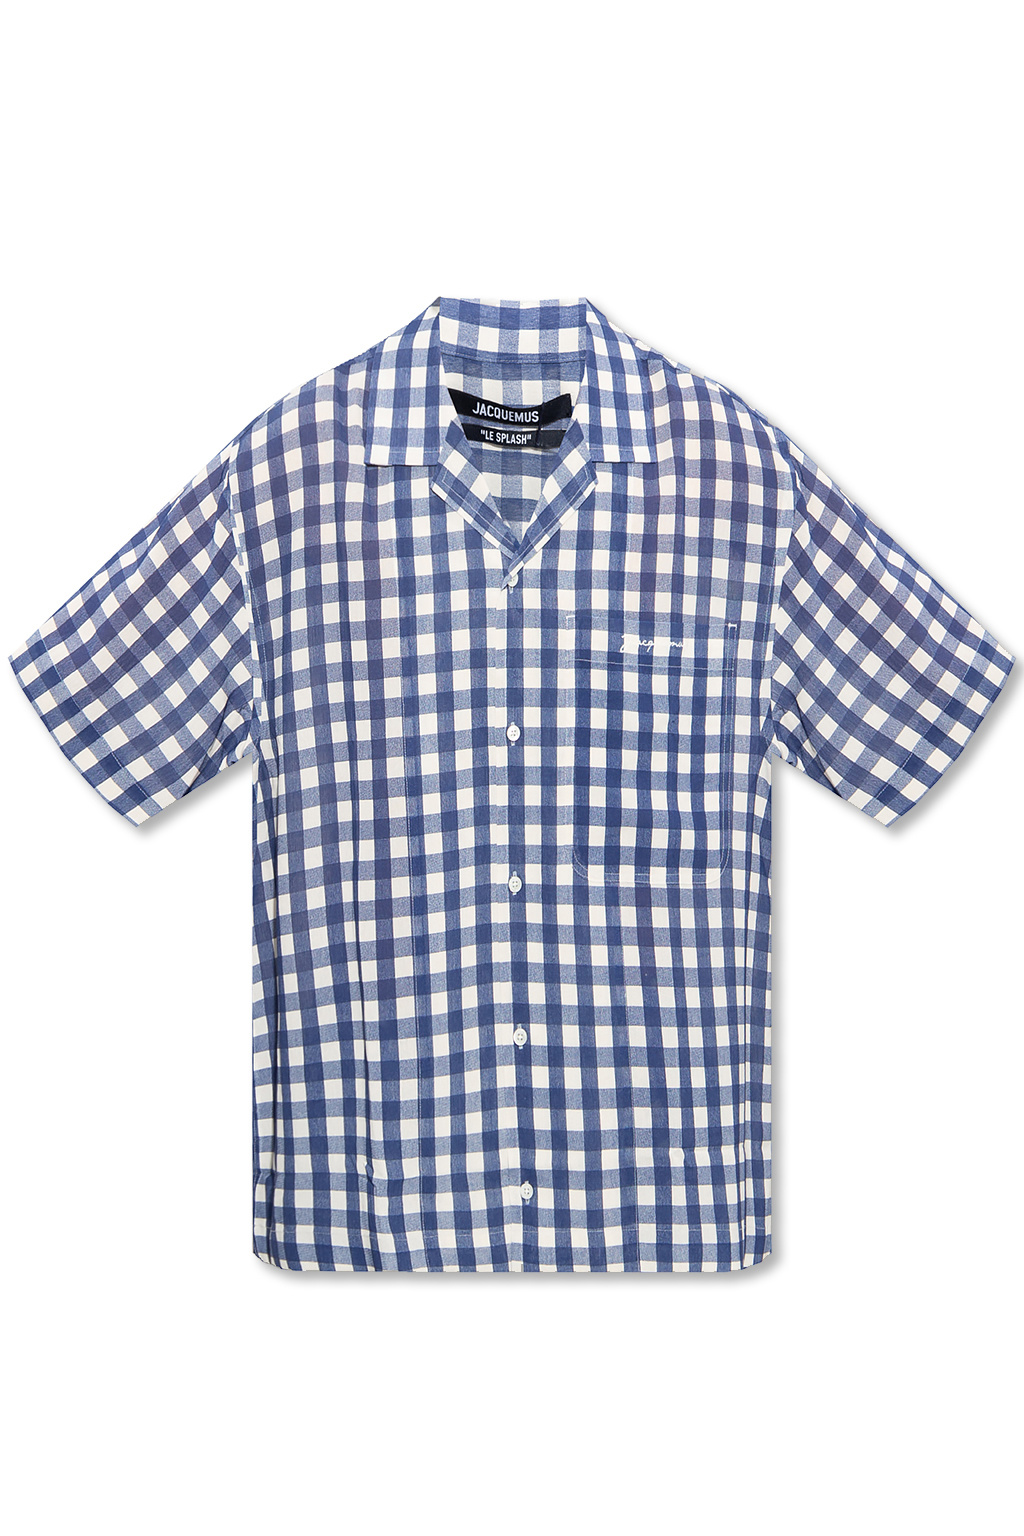 Jacquemus Checked shirt | Men's Clothing | IetpShops